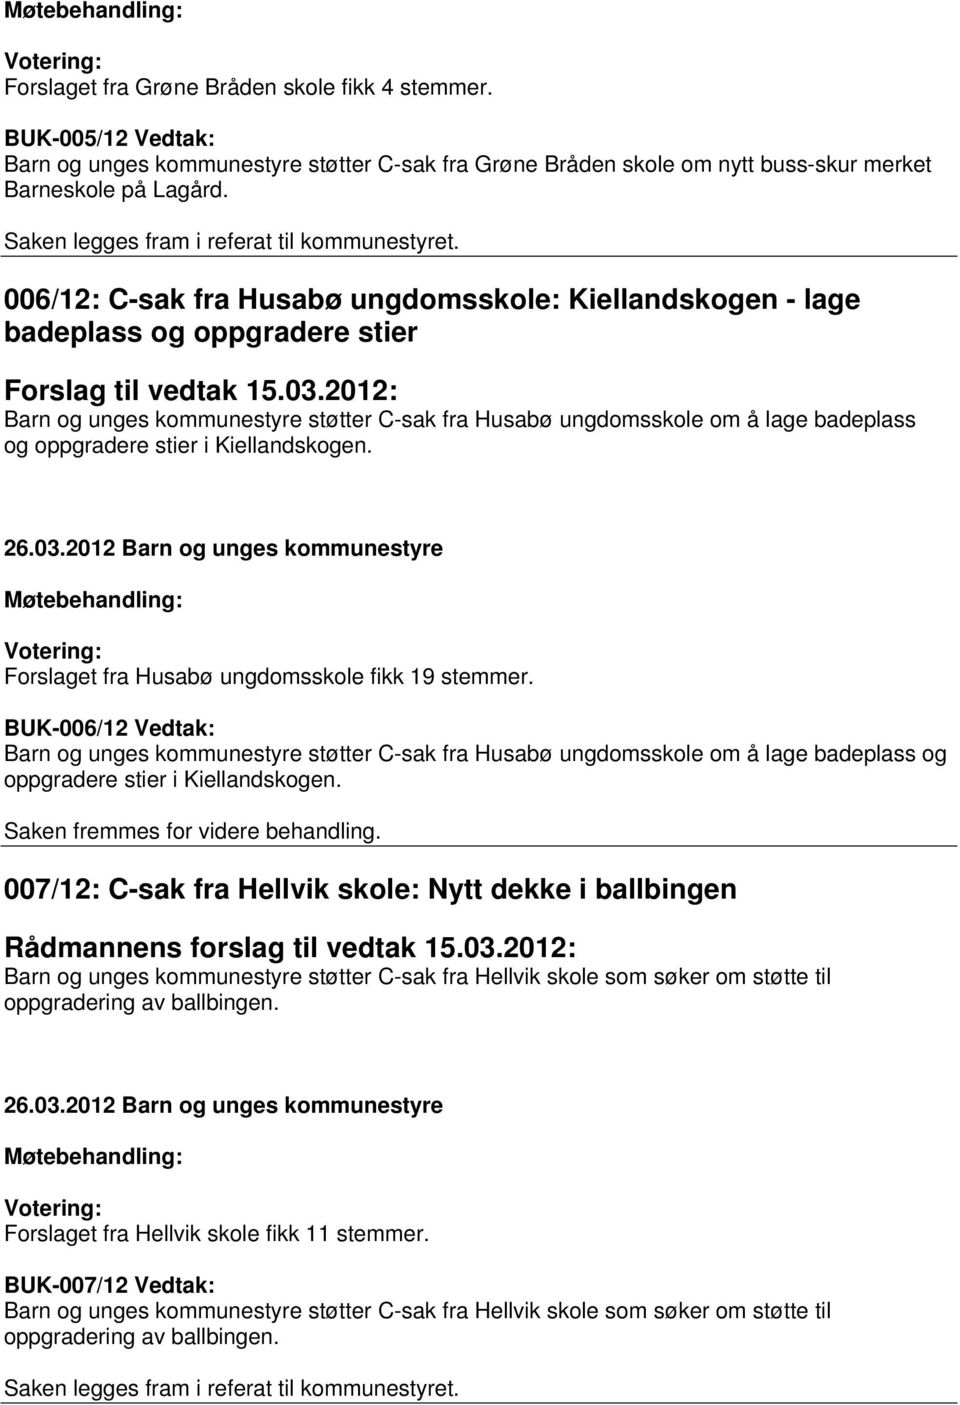 Kiellandskogen. Forslaget fra Husabø ungdomsskole fikk 19 stemmer.